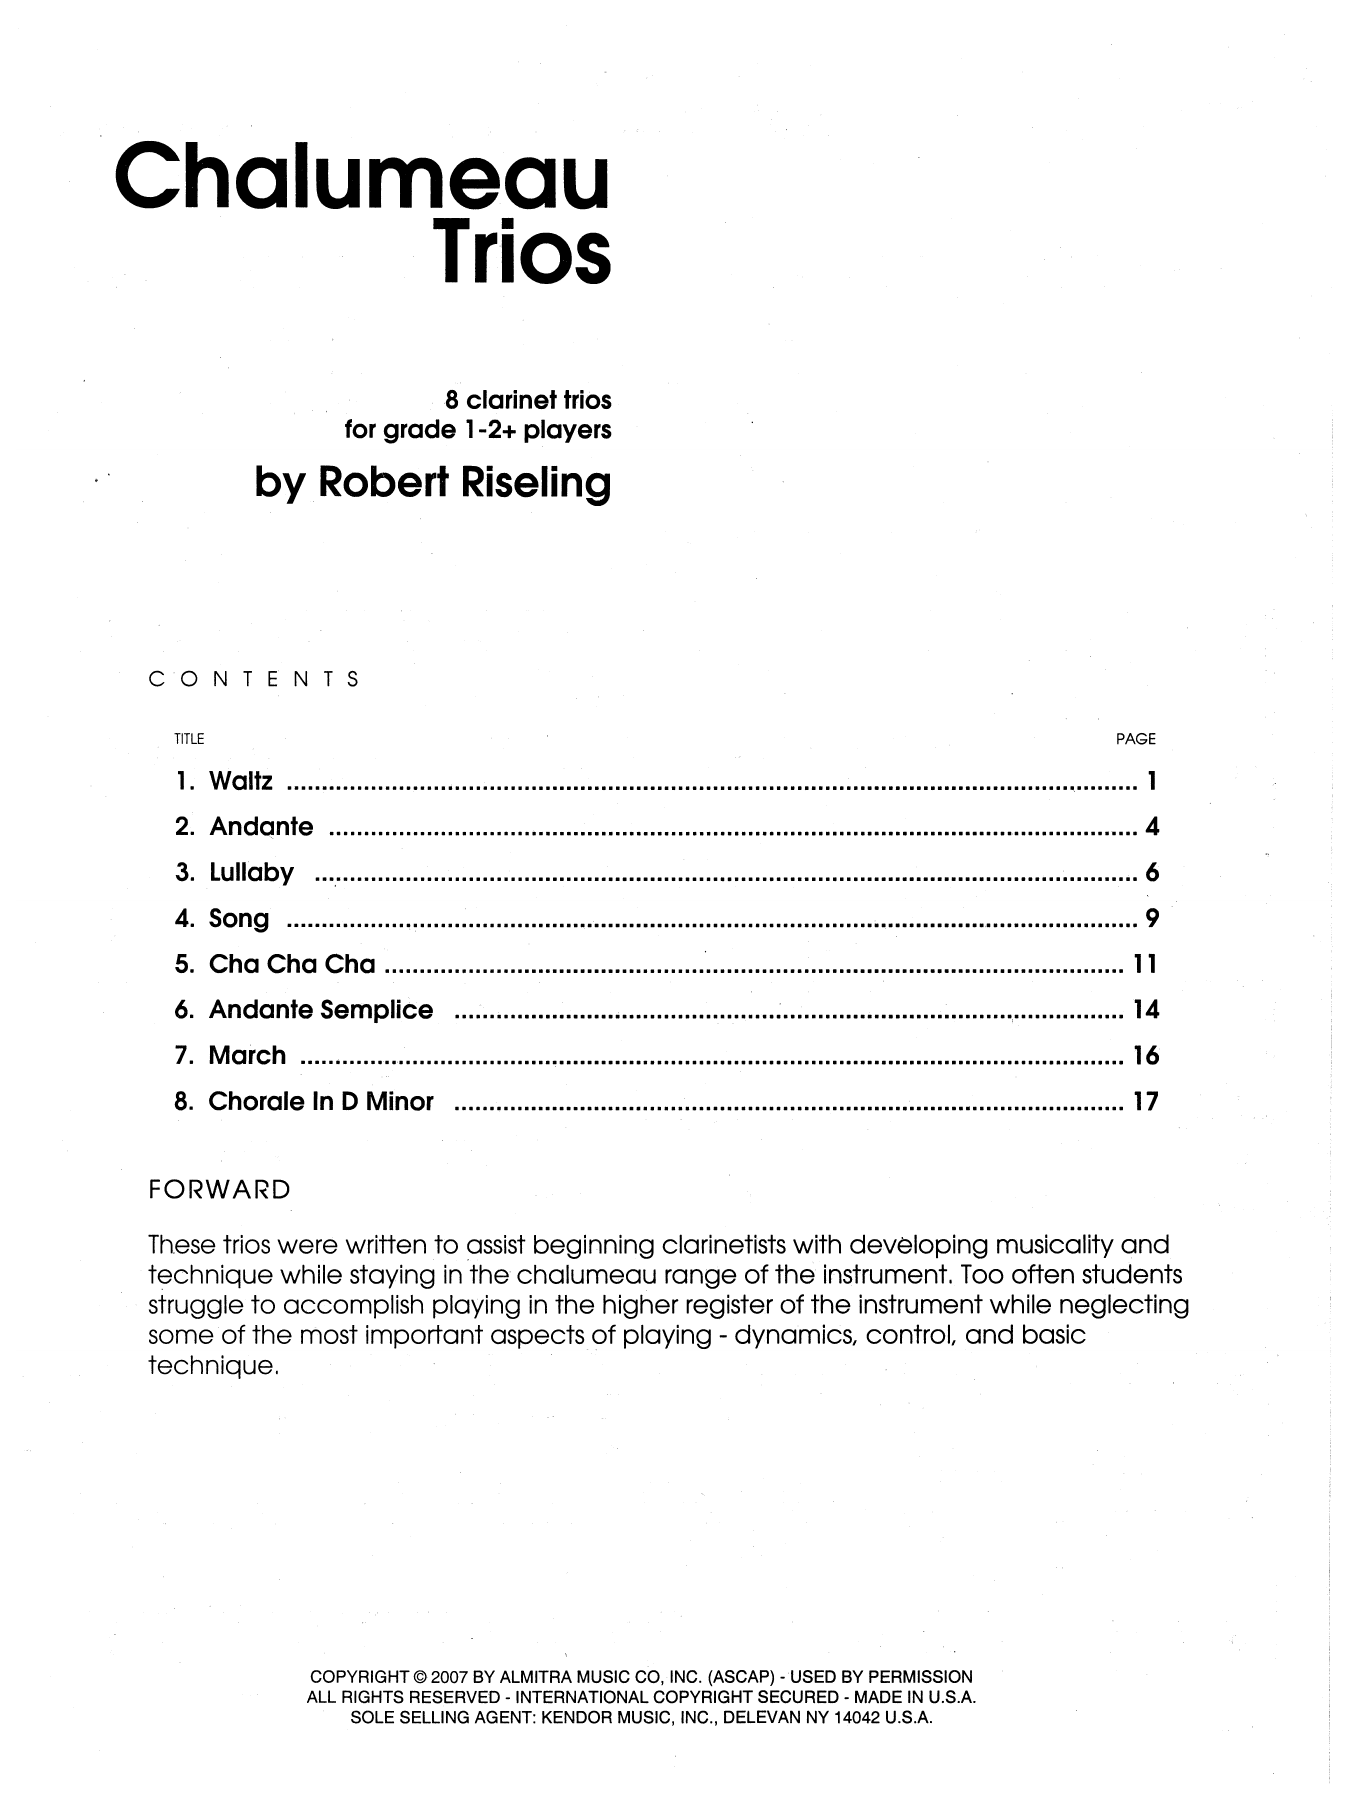 Download Riseling Chalumeau Trios - Full Score Sheet Music